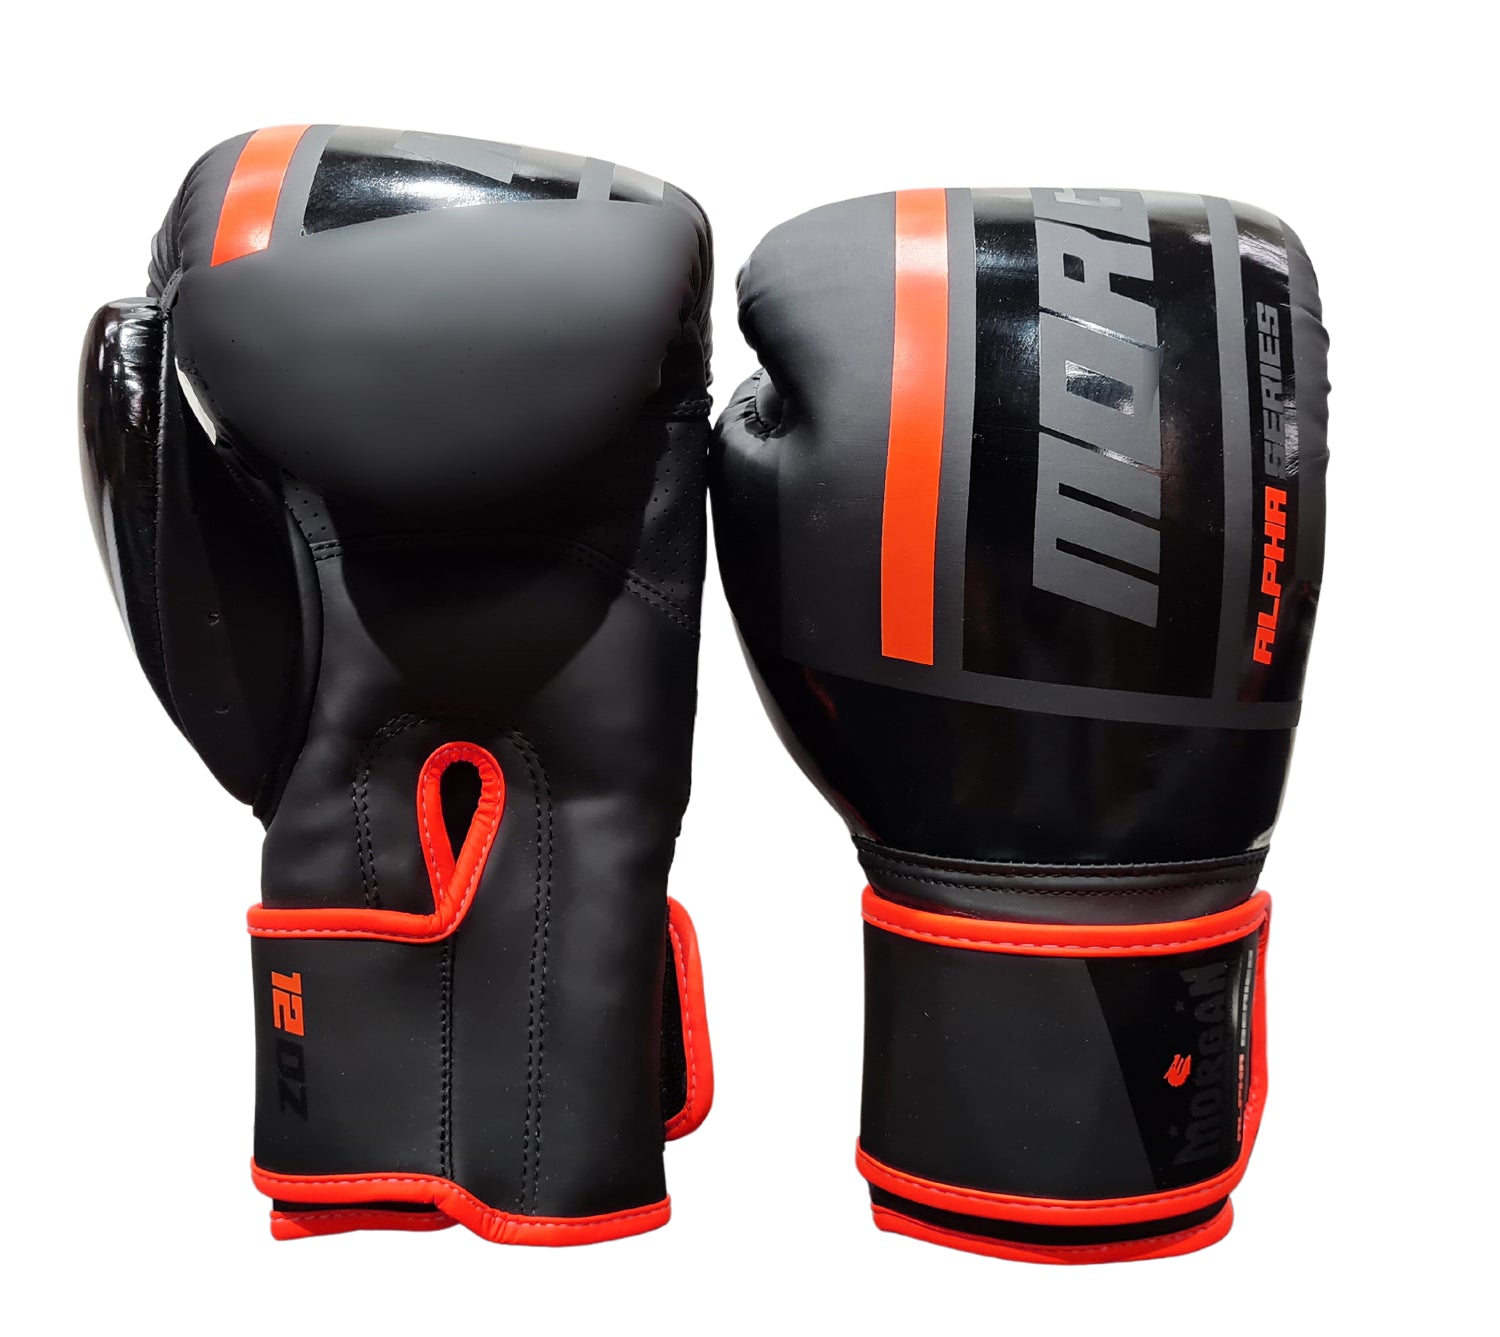 Morgan Alpha Boxing Gloves - Fitness Hero Brand new